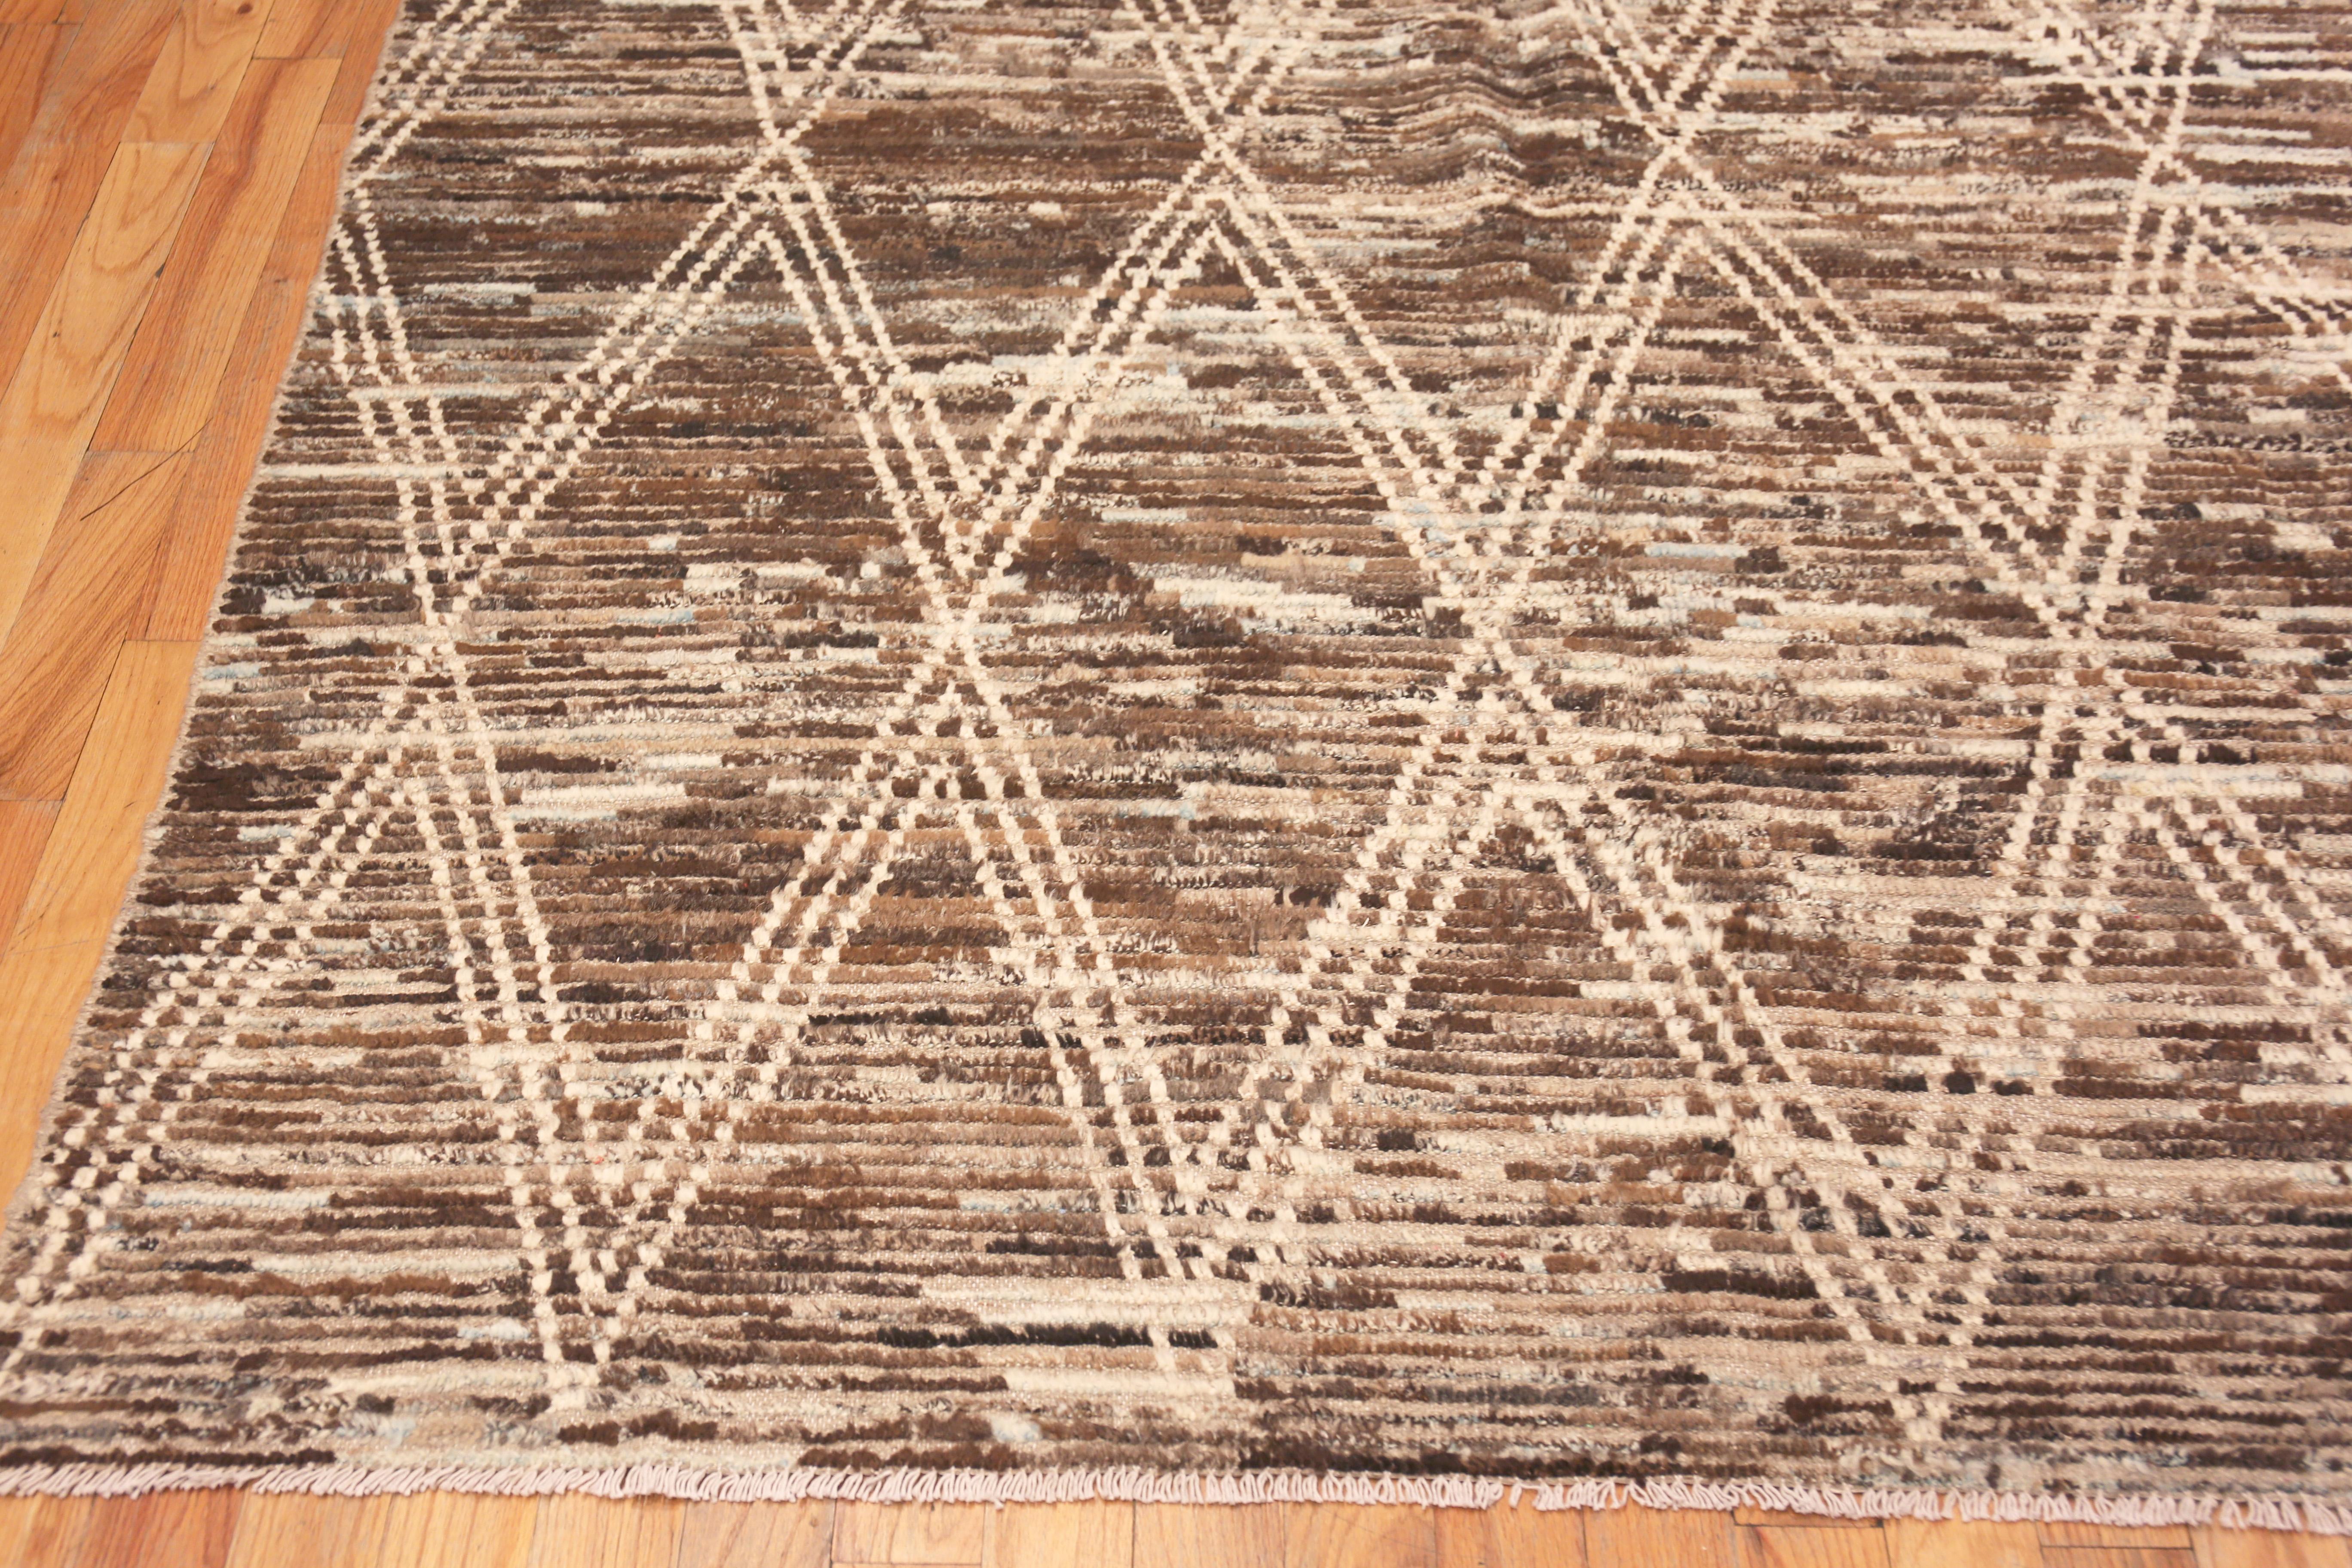 Contemporary Nazmiyal Collection Earthy Brown Tribal Geometric Modern Rug 10' x 13'5